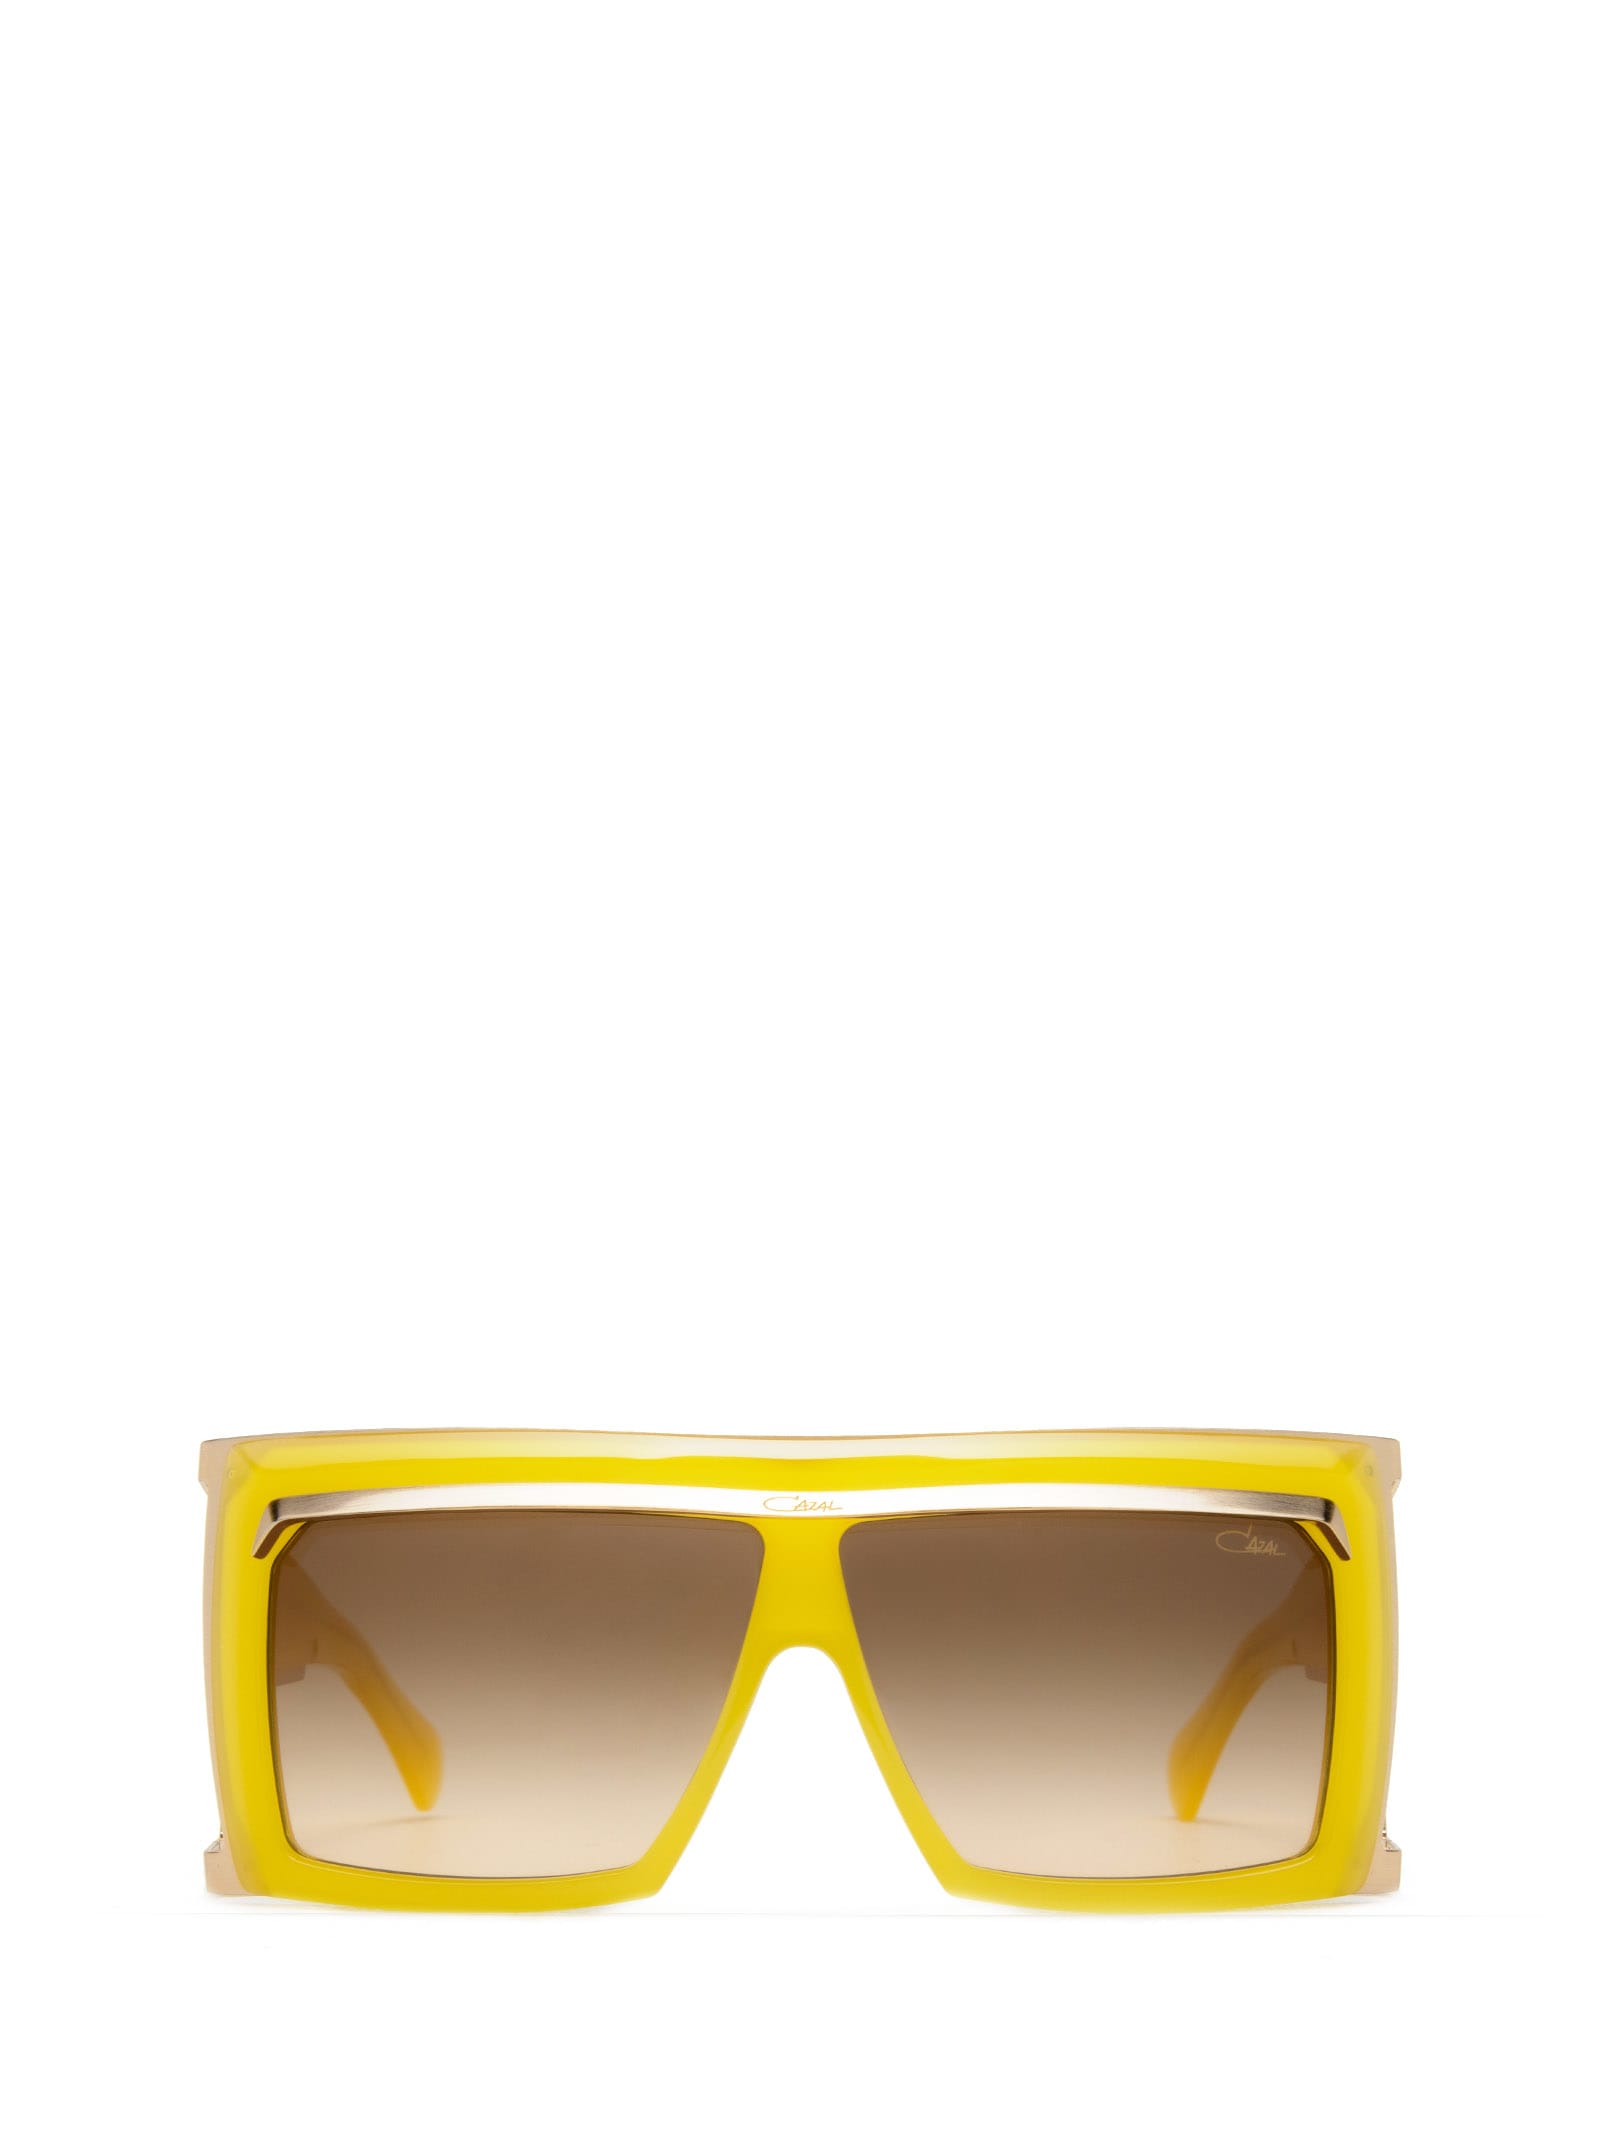 300 Yellow - Gold Sunglasses